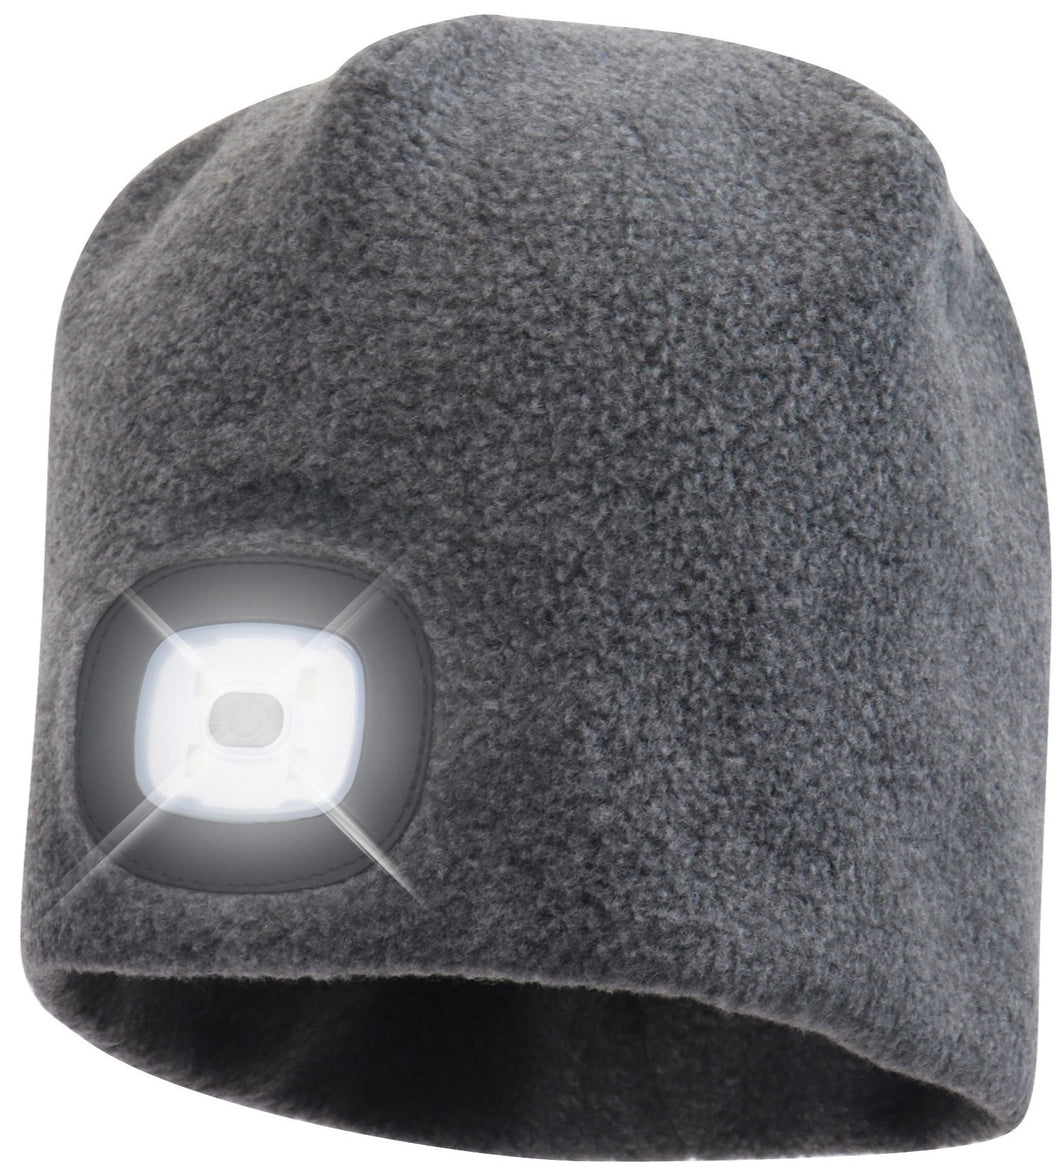 Headlightz® Beanie - Fleece - Grey